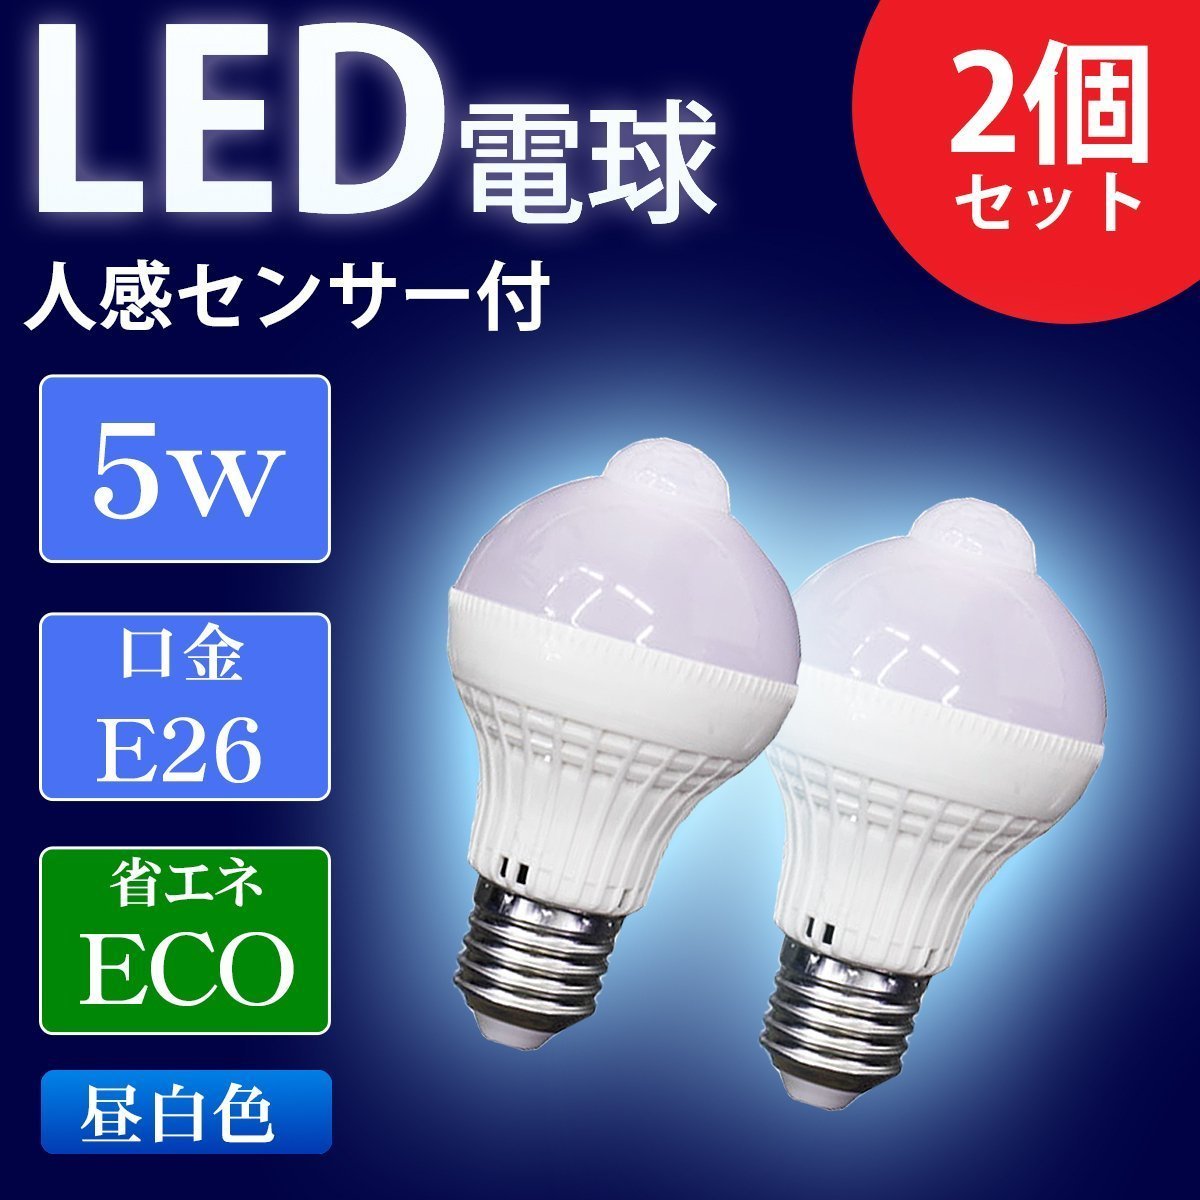 NEC LEDキッチンライト 昼白色 MVDB40002K1/N-8-